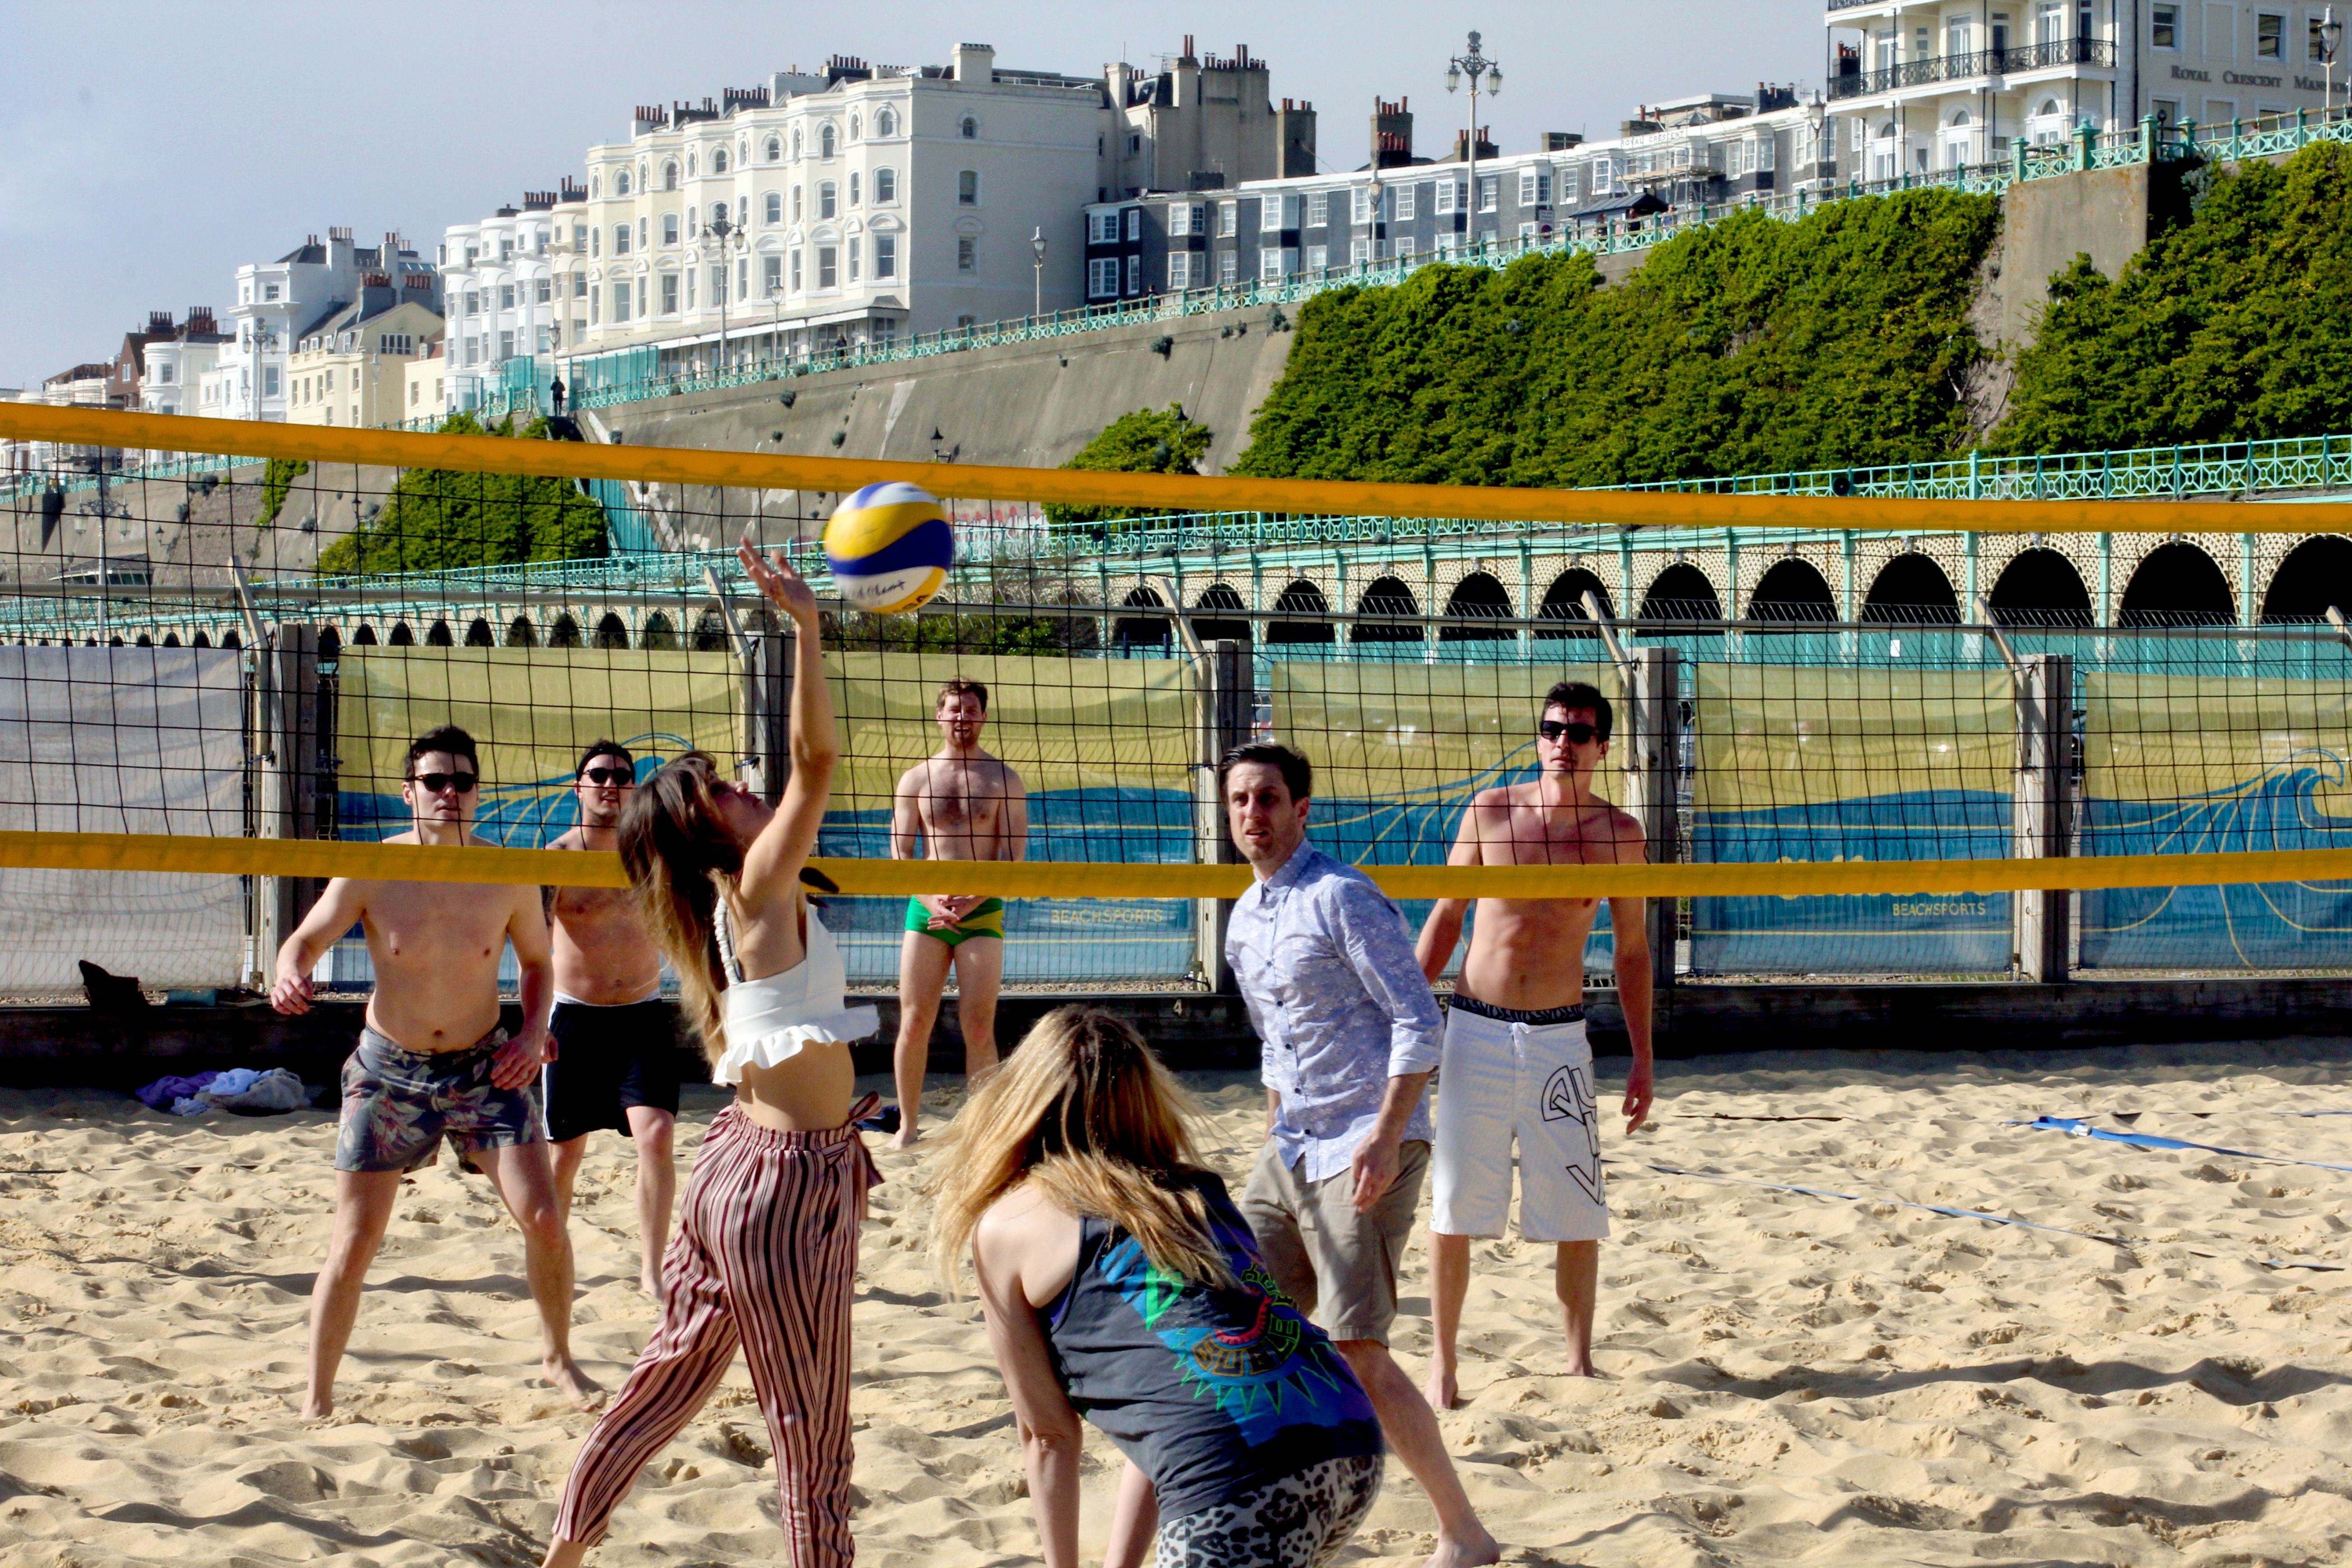 Teambuilding at Yellowave Beach Sports in Brighton volleyball match photo credit damien gabet